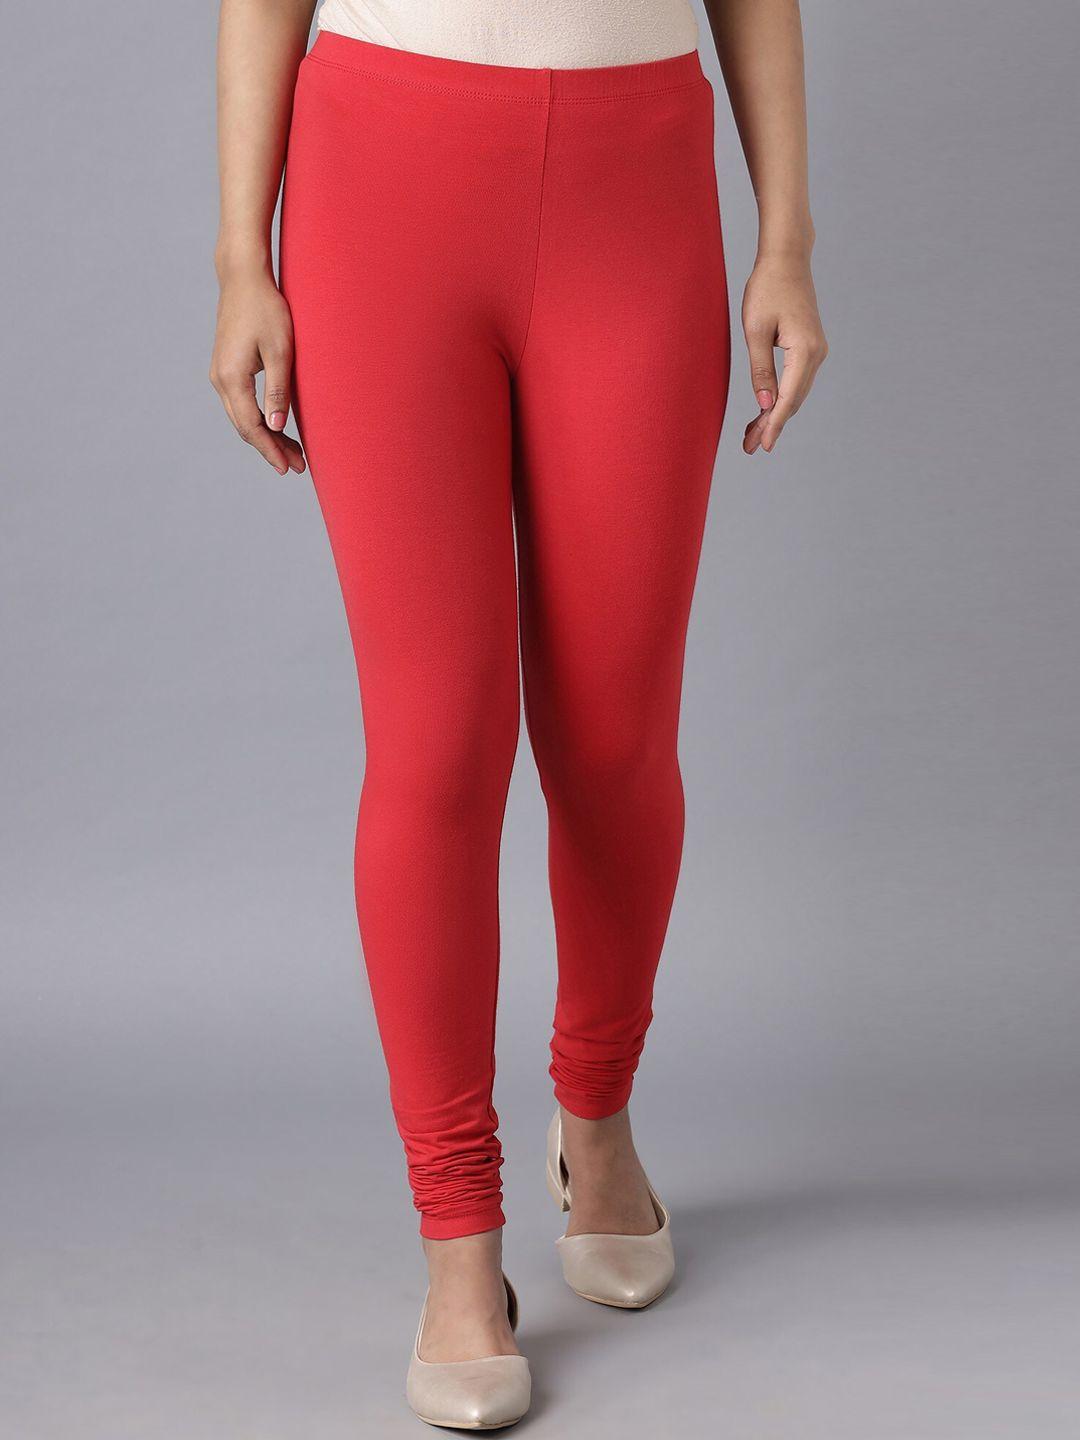 elleven-women-red-solid-ankle-length-skin-fit-leggings